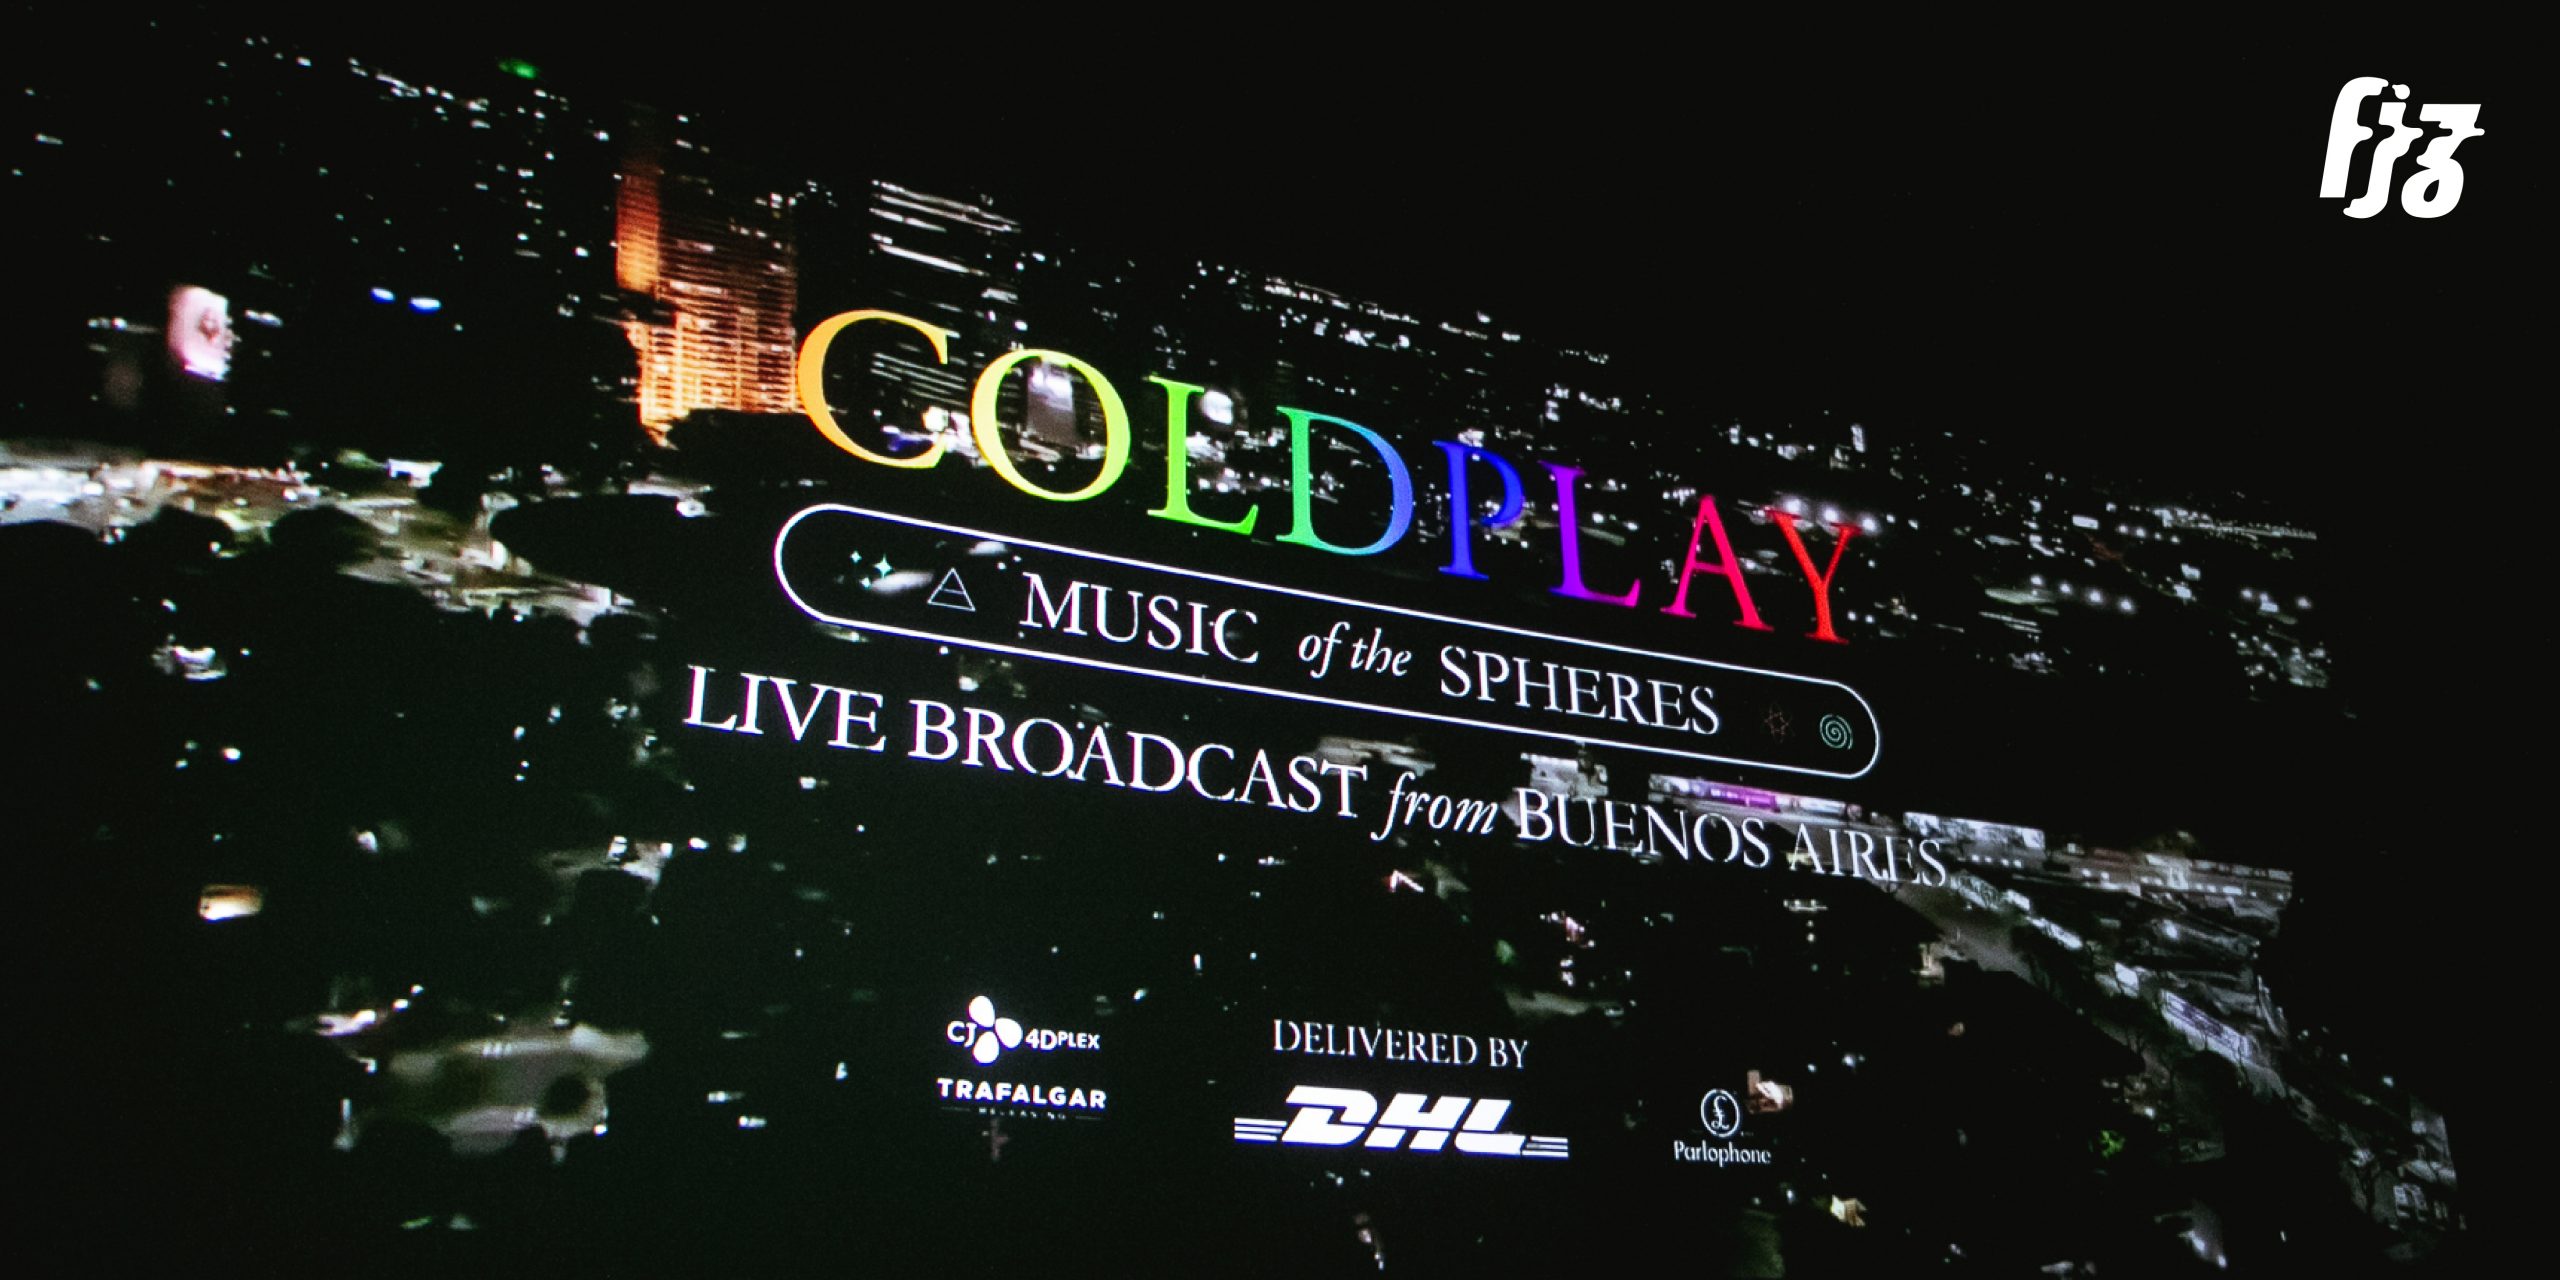 'Music of the Spheres Tour' การกลับมาทัวร์คอนเสิร์ตอีกครั้งของ Coldplay